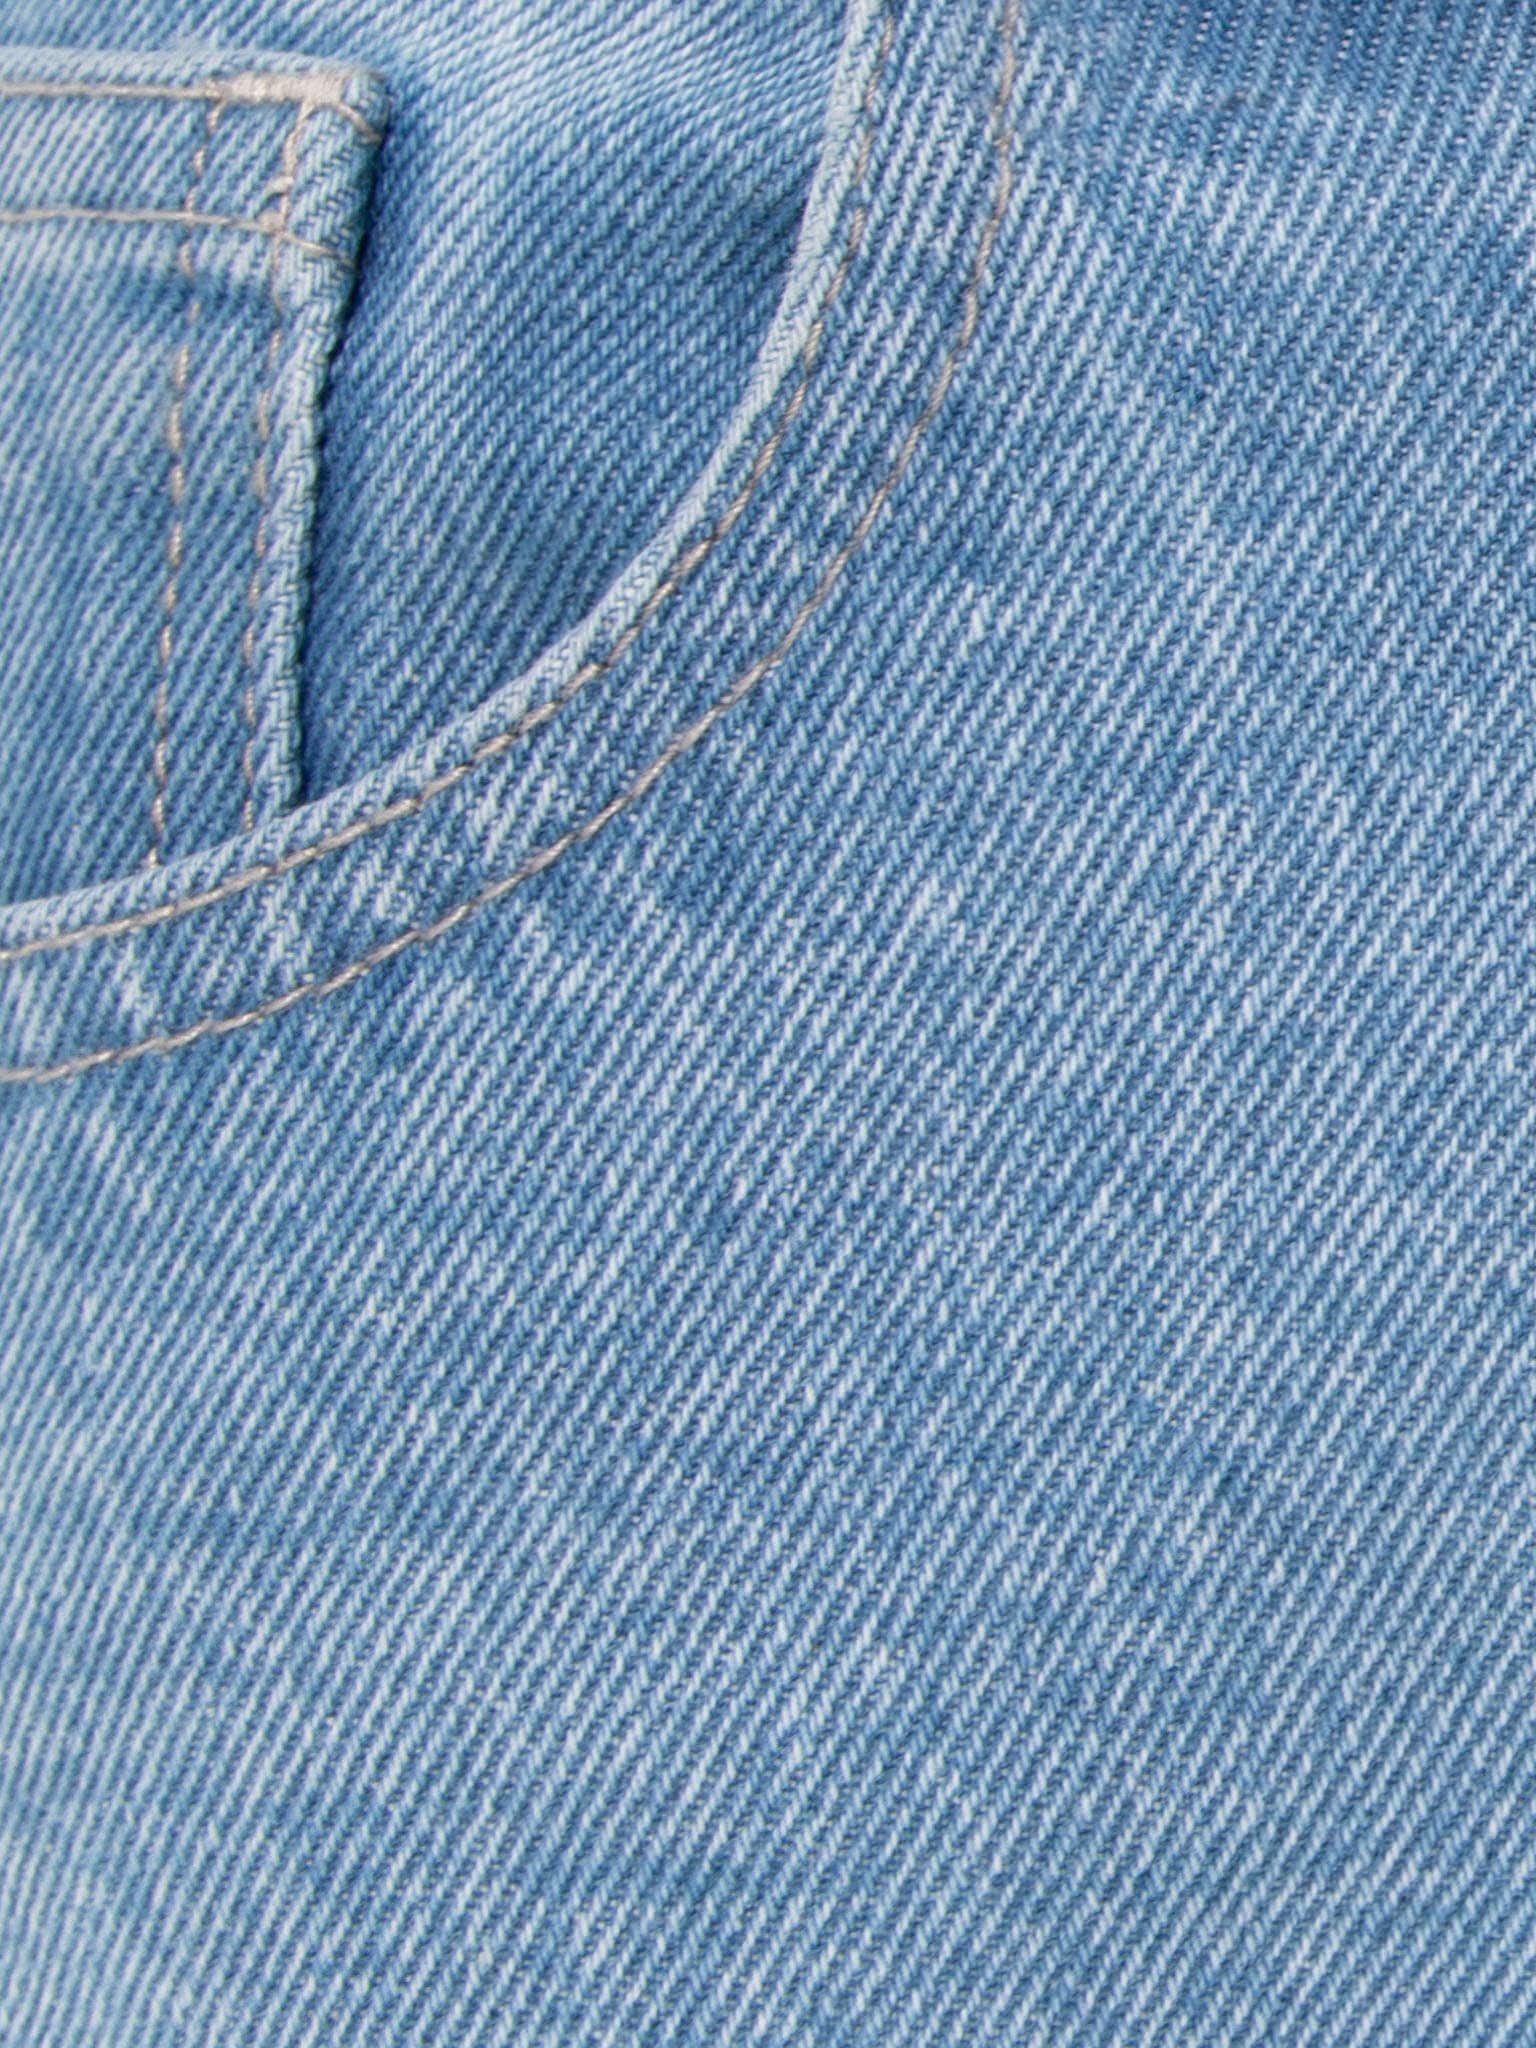 Straight-leg jeans with rhinestone fringe